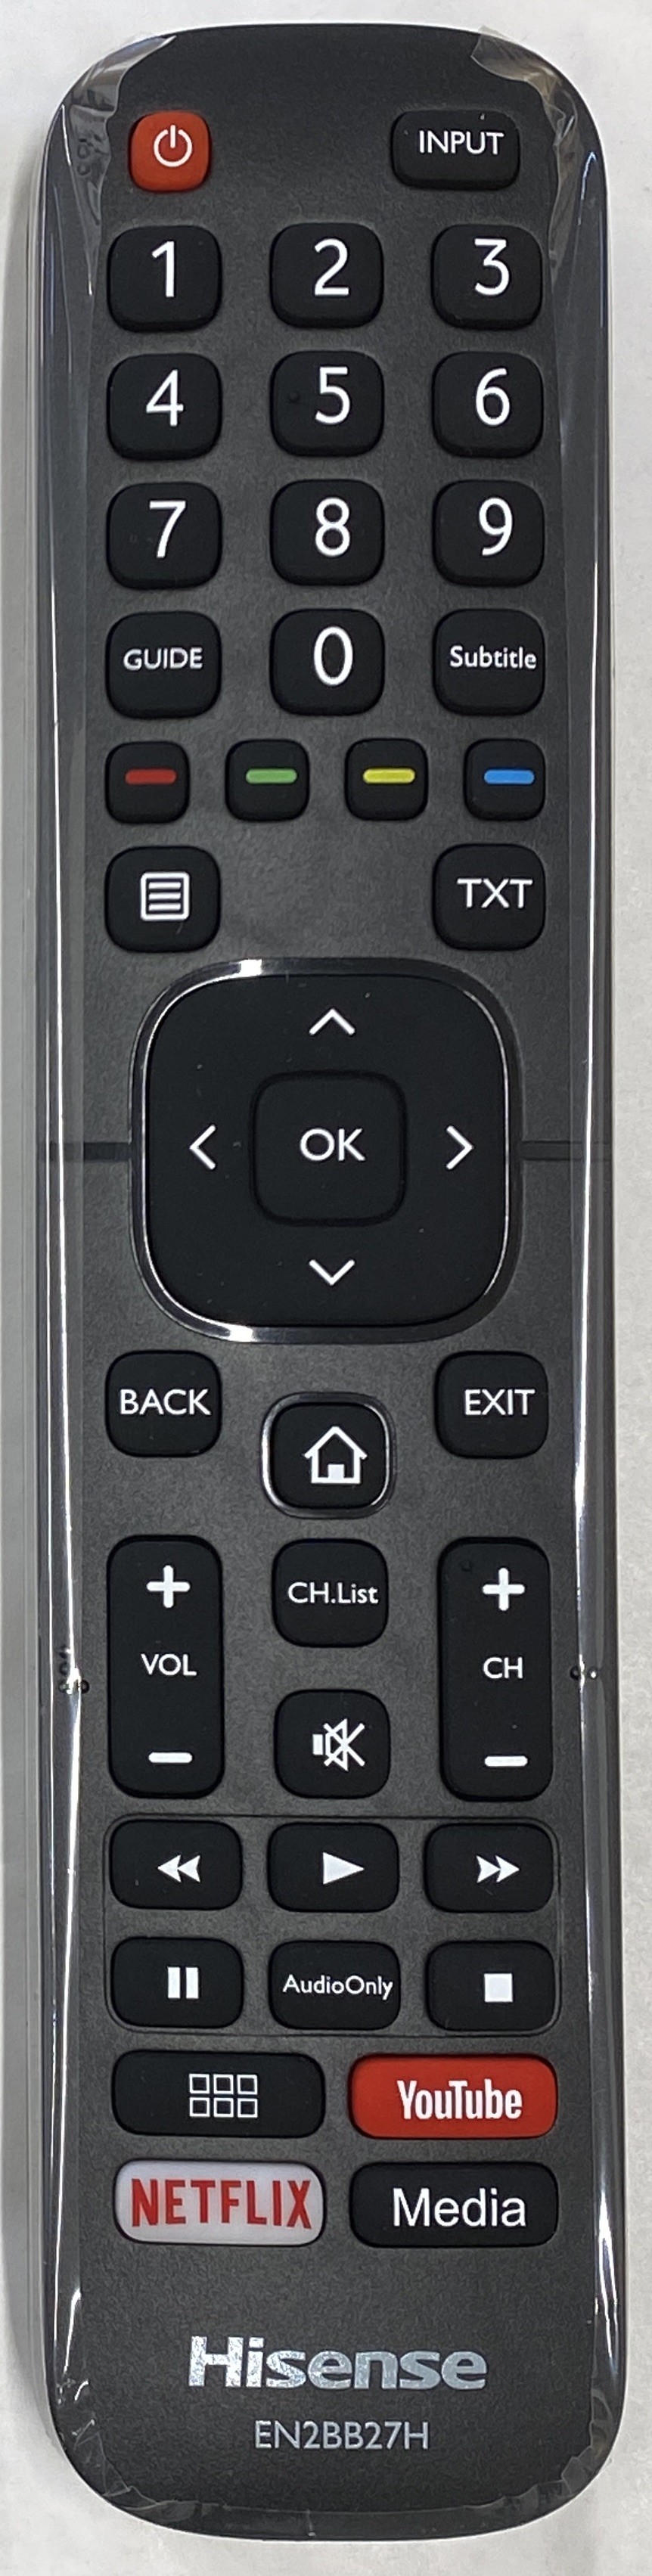 HISENSE H32A5600 Remote Control Original